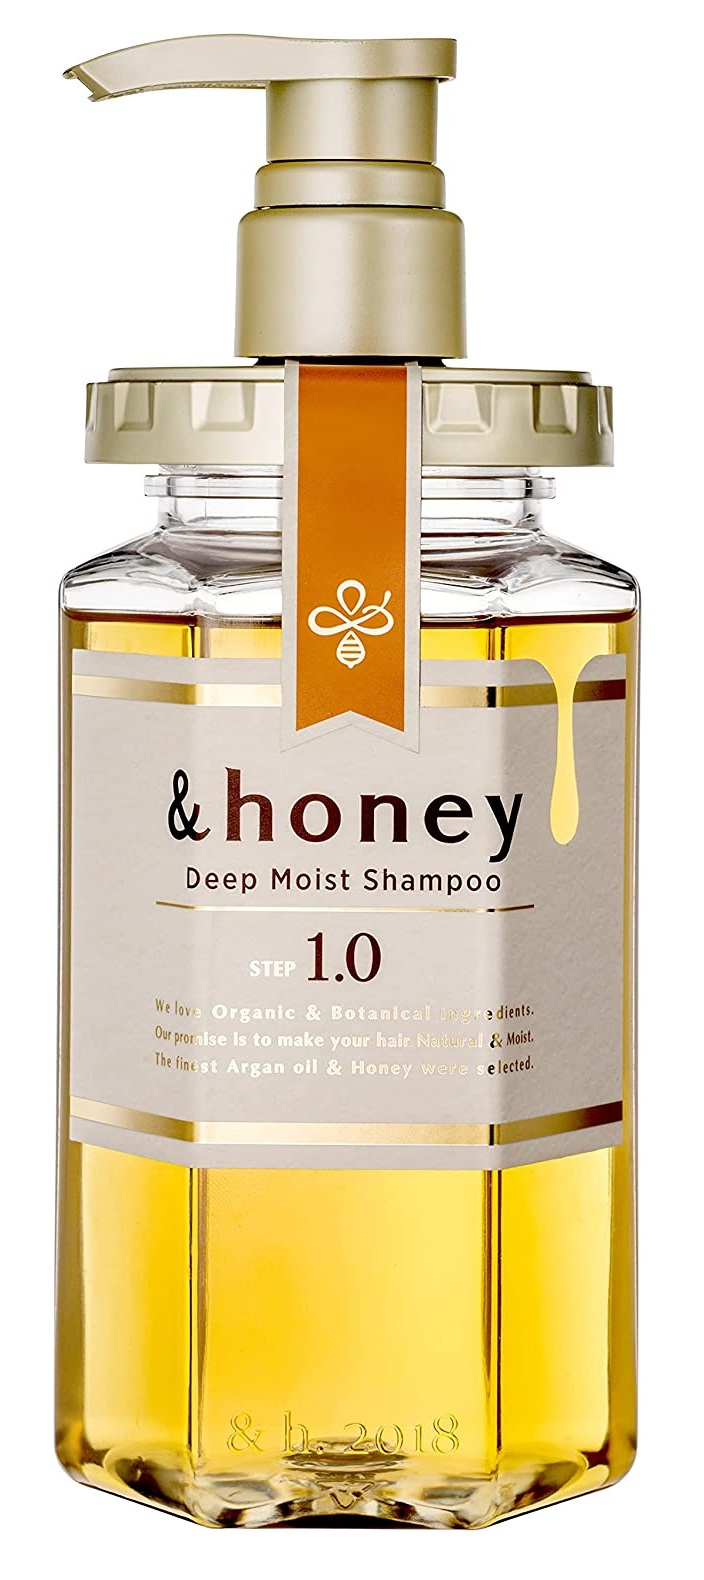 &honey Deep Moist Shampoo. Photo: amazon.com